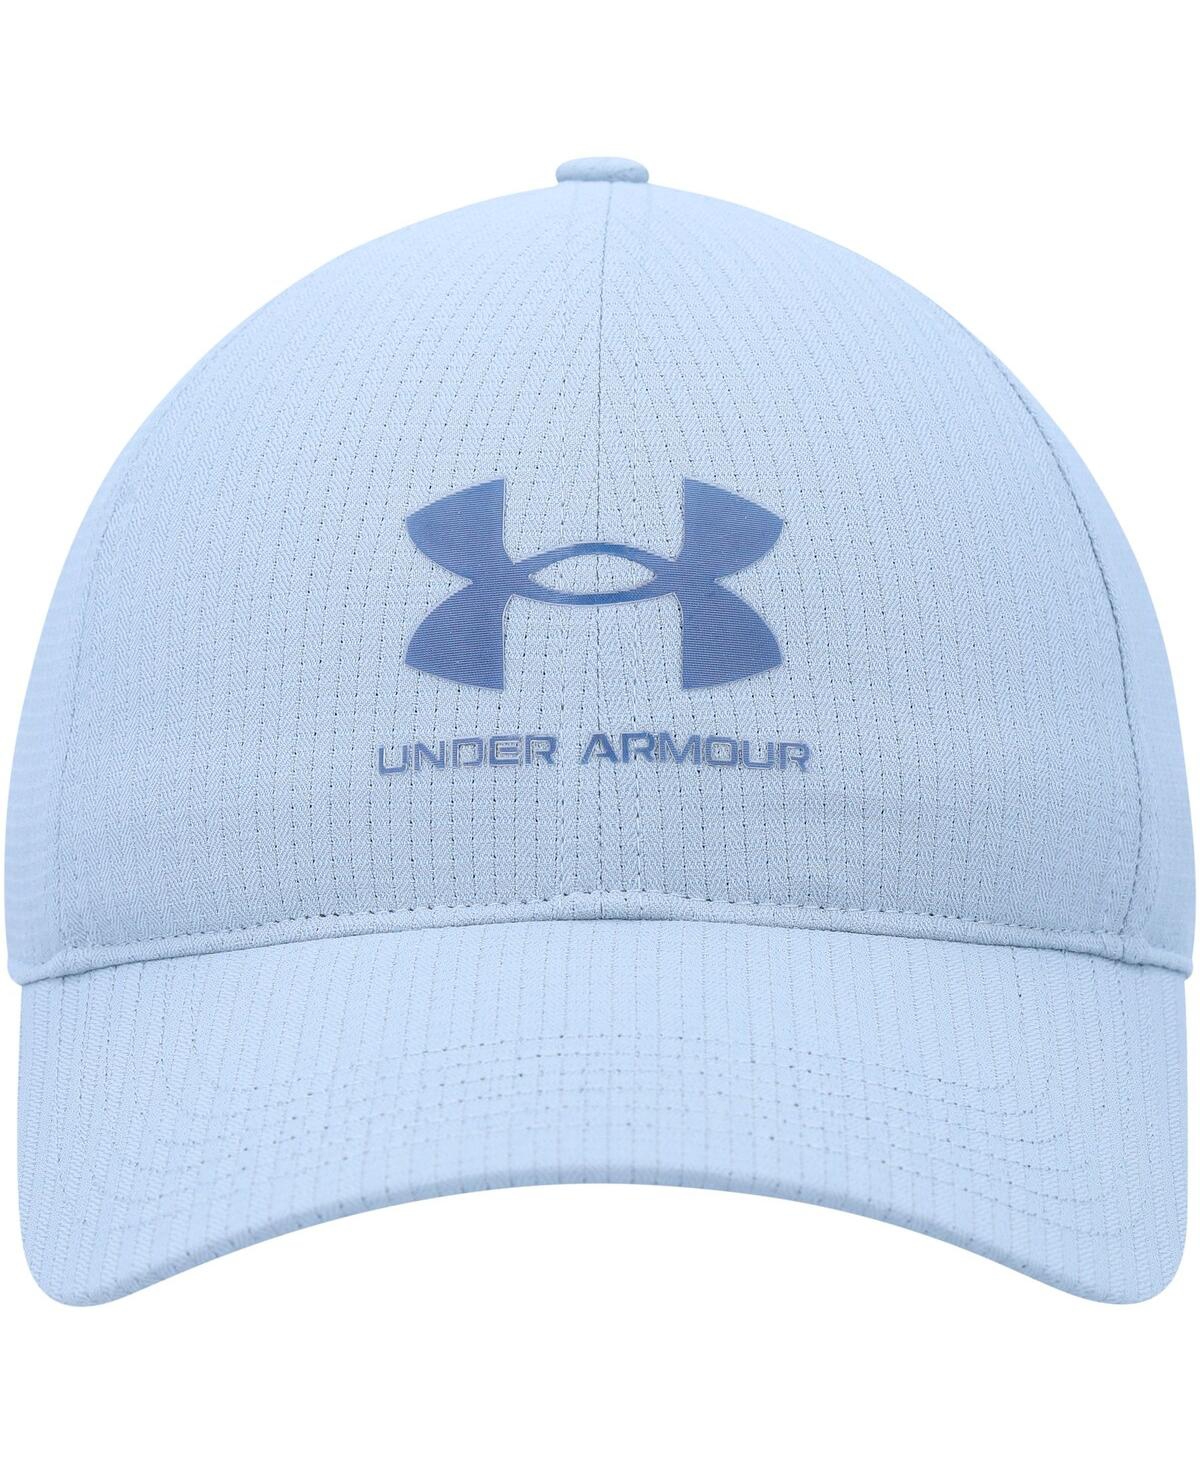 Shop Under Armour Men's  Light Blue Performance Adjustable Hat